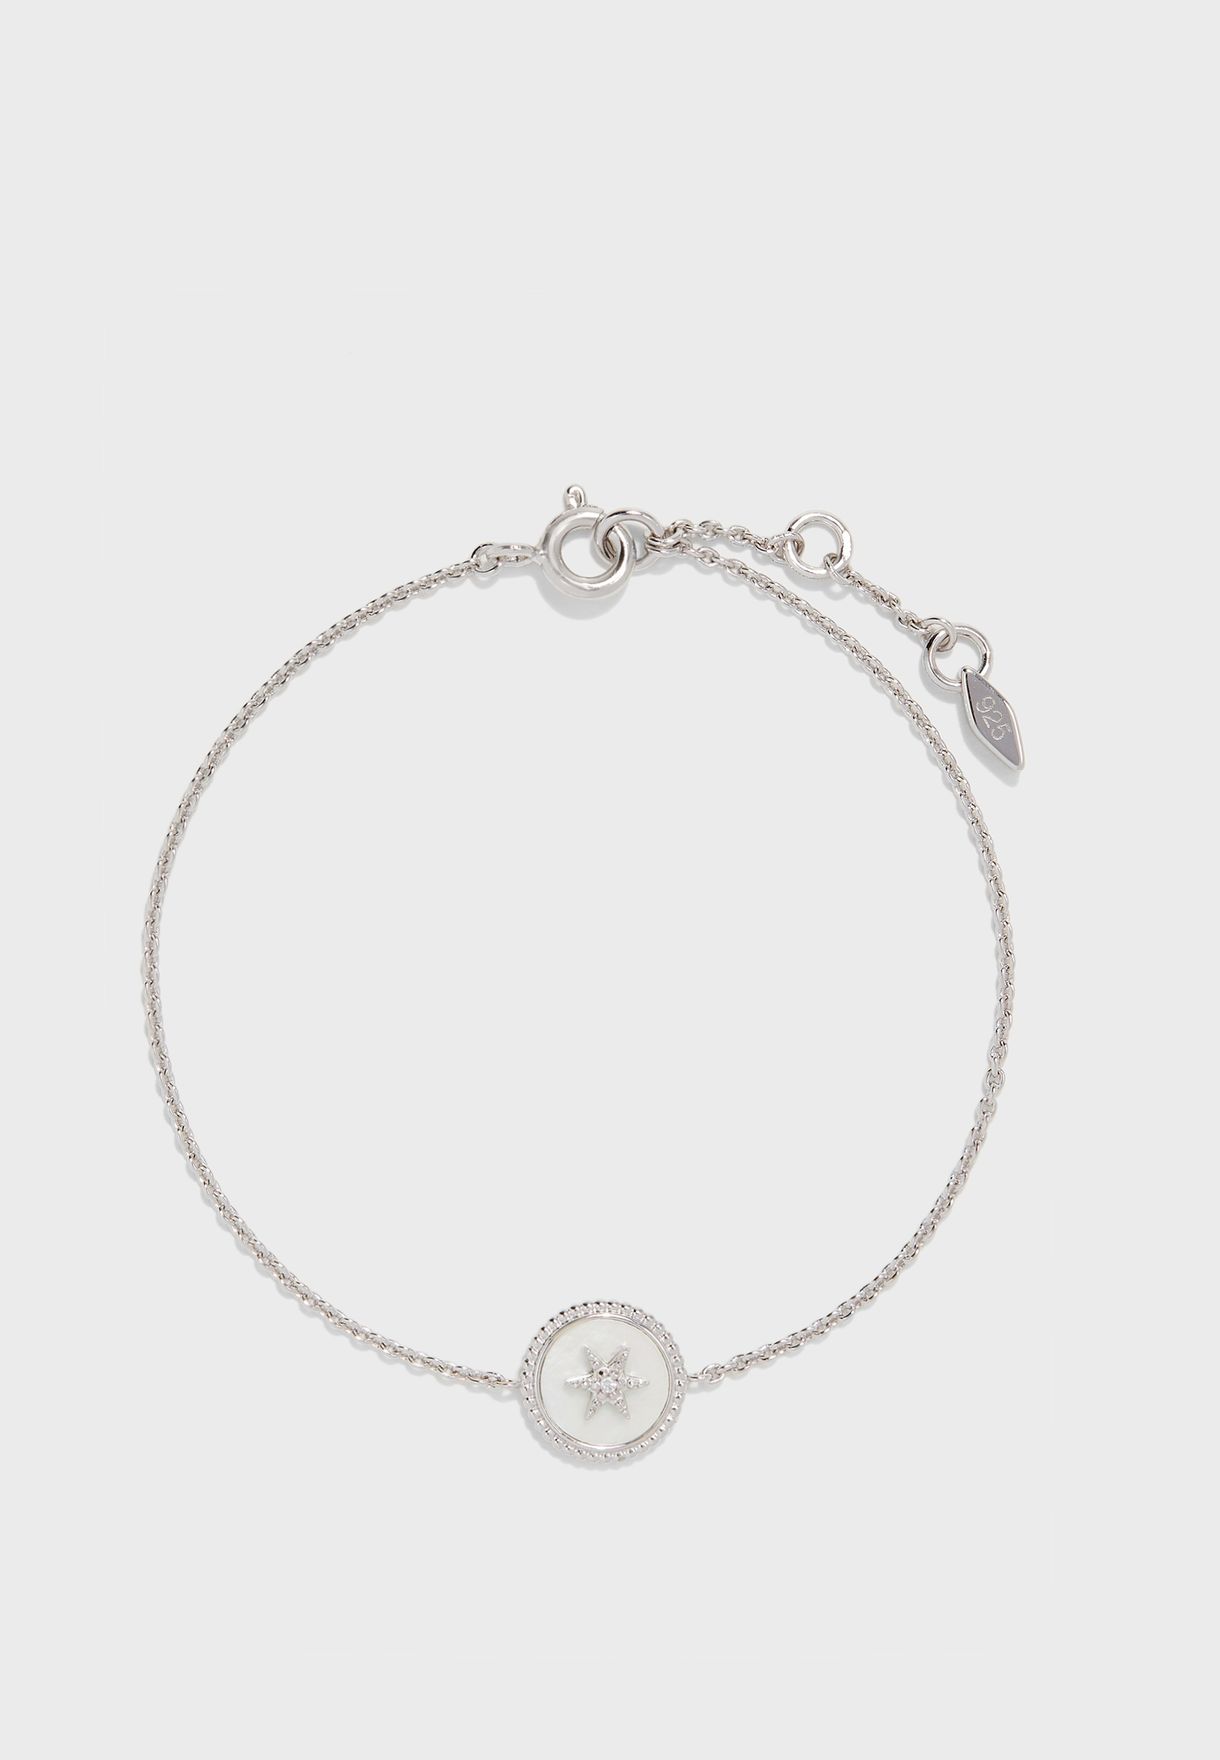 Vintage Star Chain Bracelet